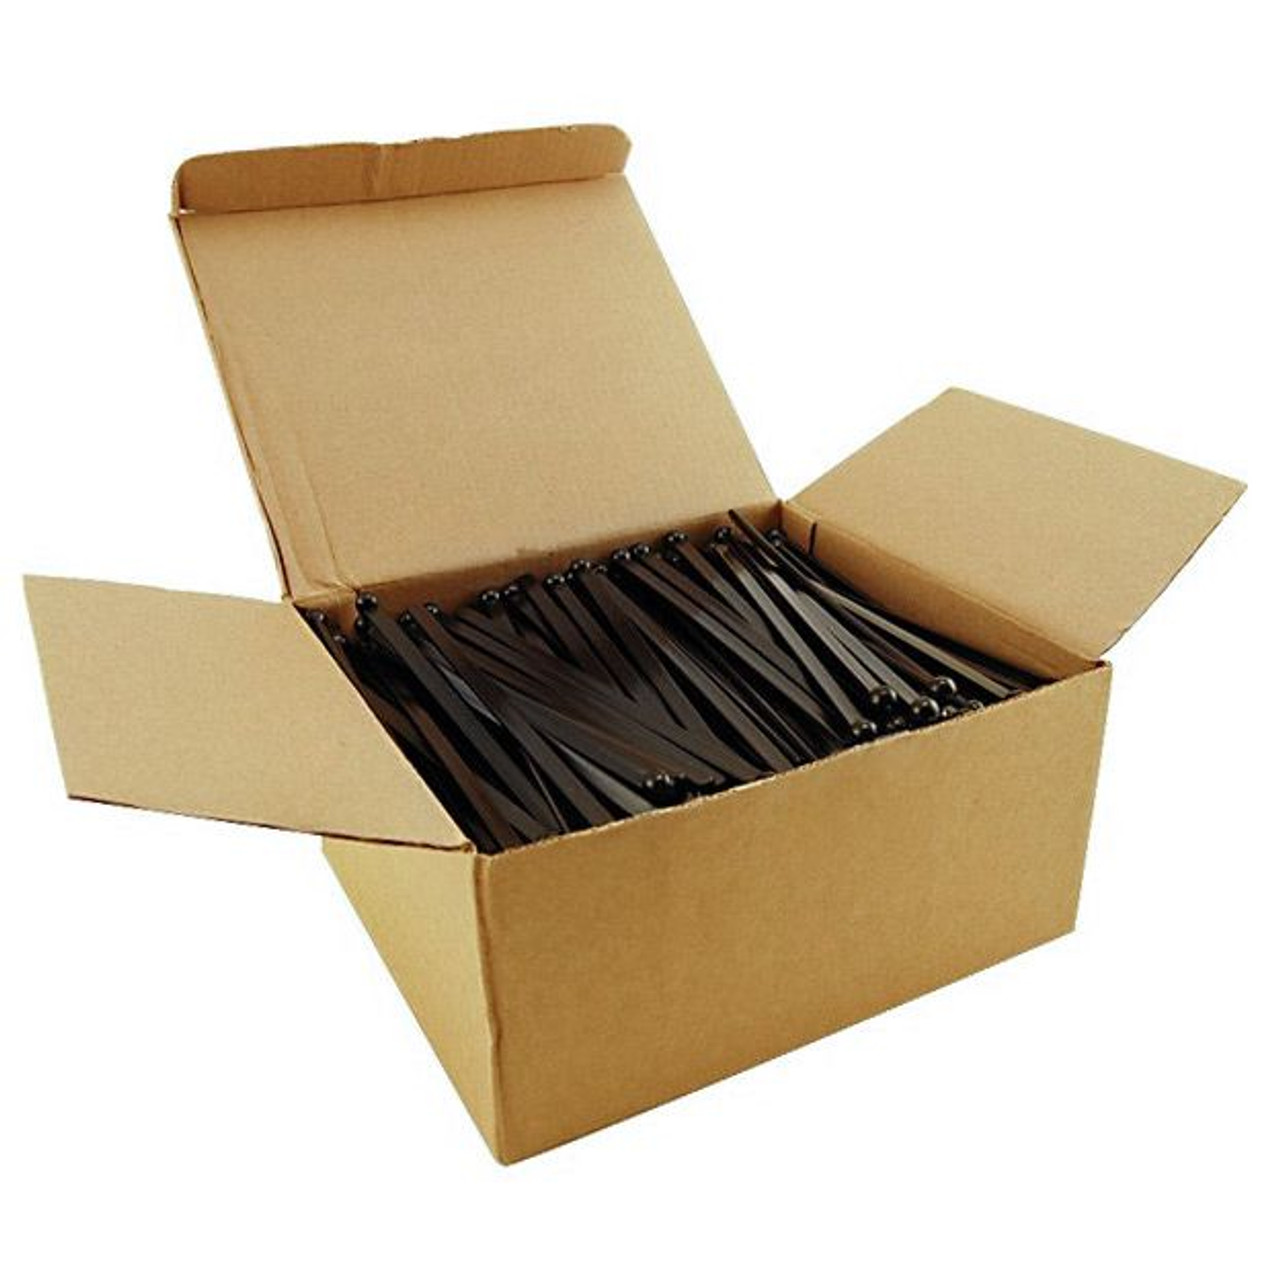 Berkley Square - Black Plastic Stir Sticks - Box of 1000